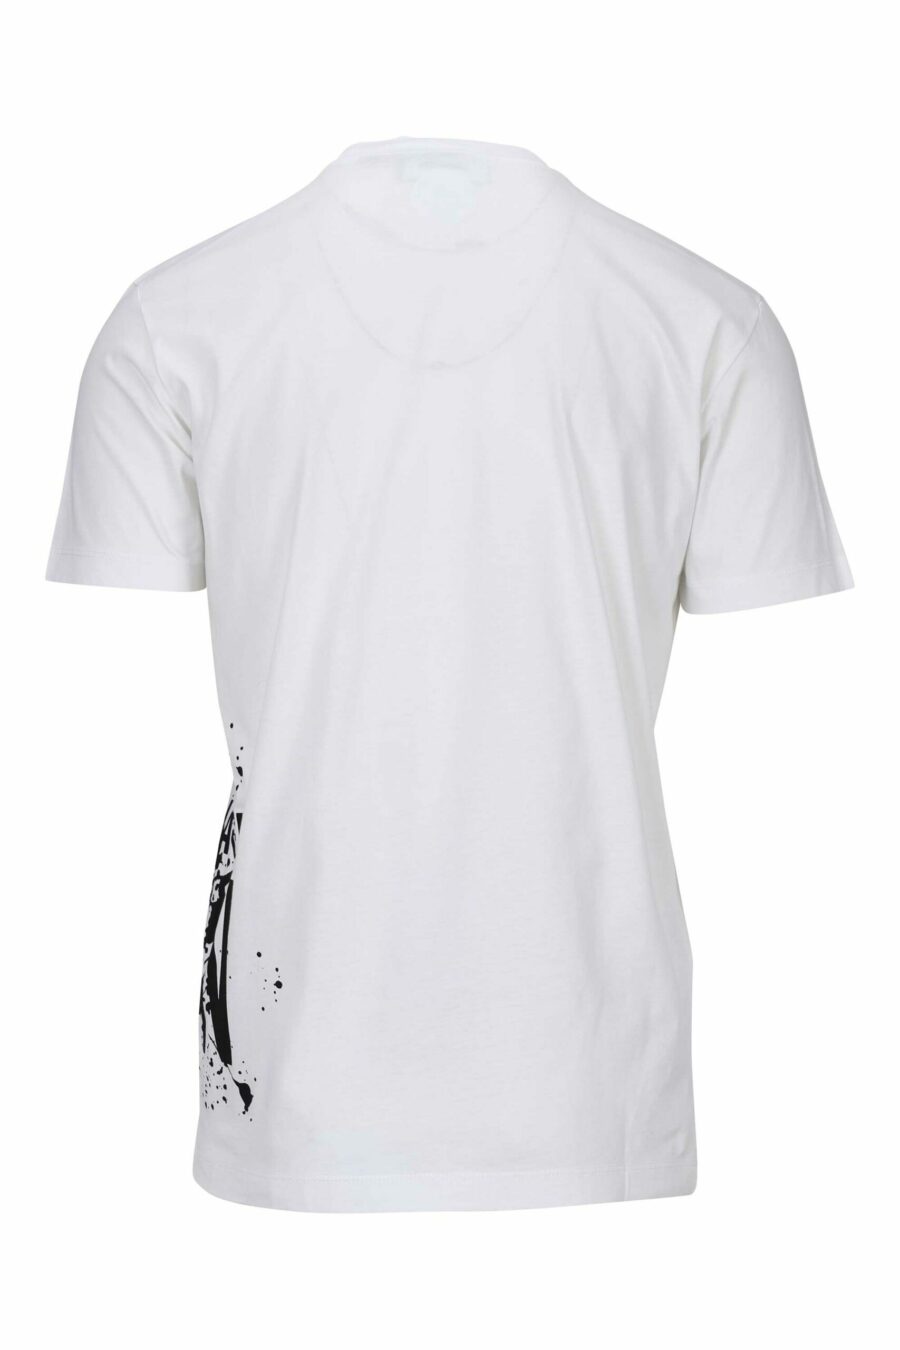 Camiseta blanca con maxilogo "icon splash" bajo - 8054148358549 1 scaled